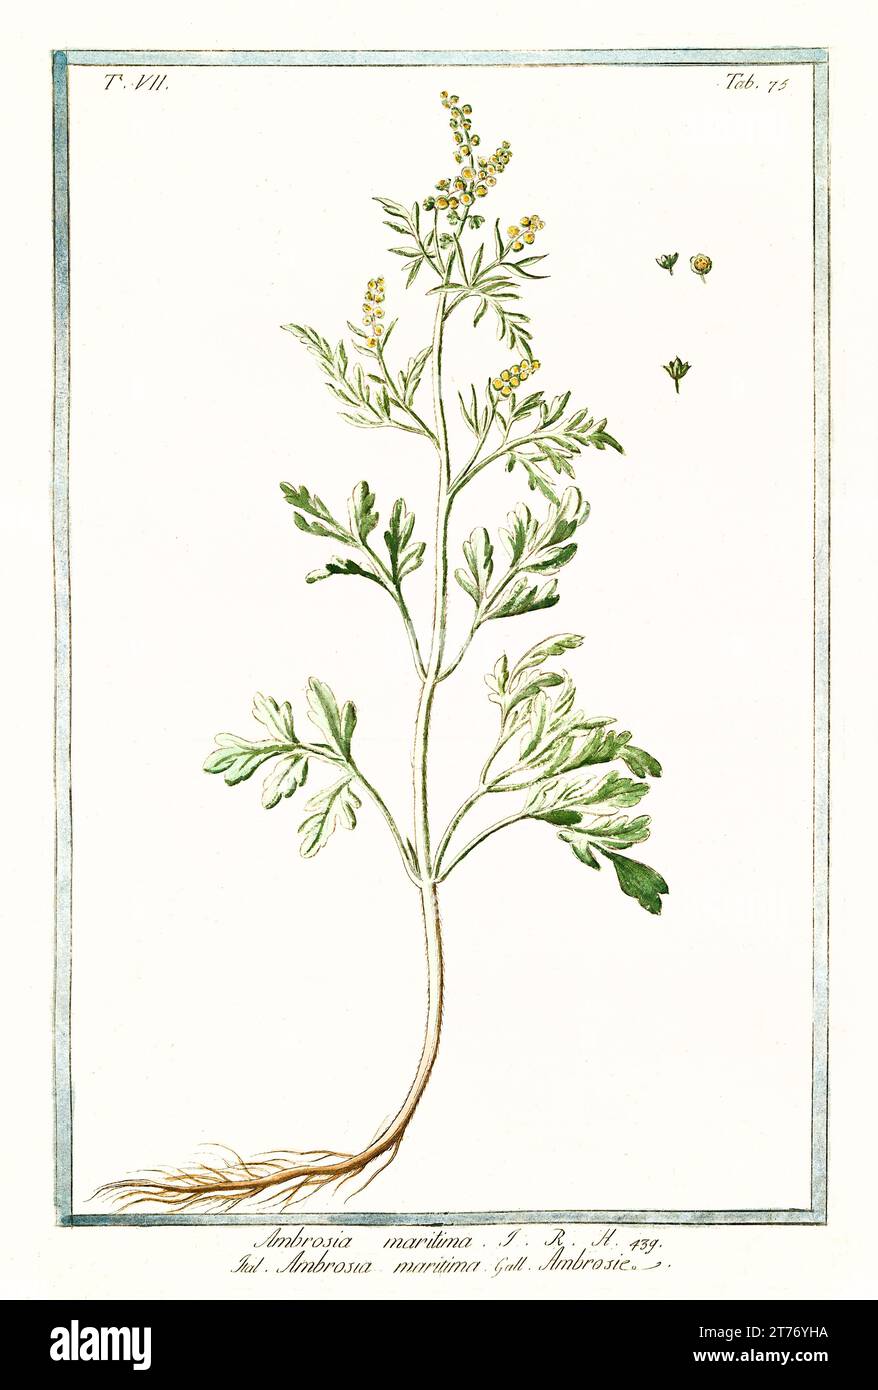 Old illustration of Sea ragweed (Ambrosia maritima). By G. Bonelli on Hortus Romanus, publ. N. Martelli, Rome, 1772 – 93 Stock Photo